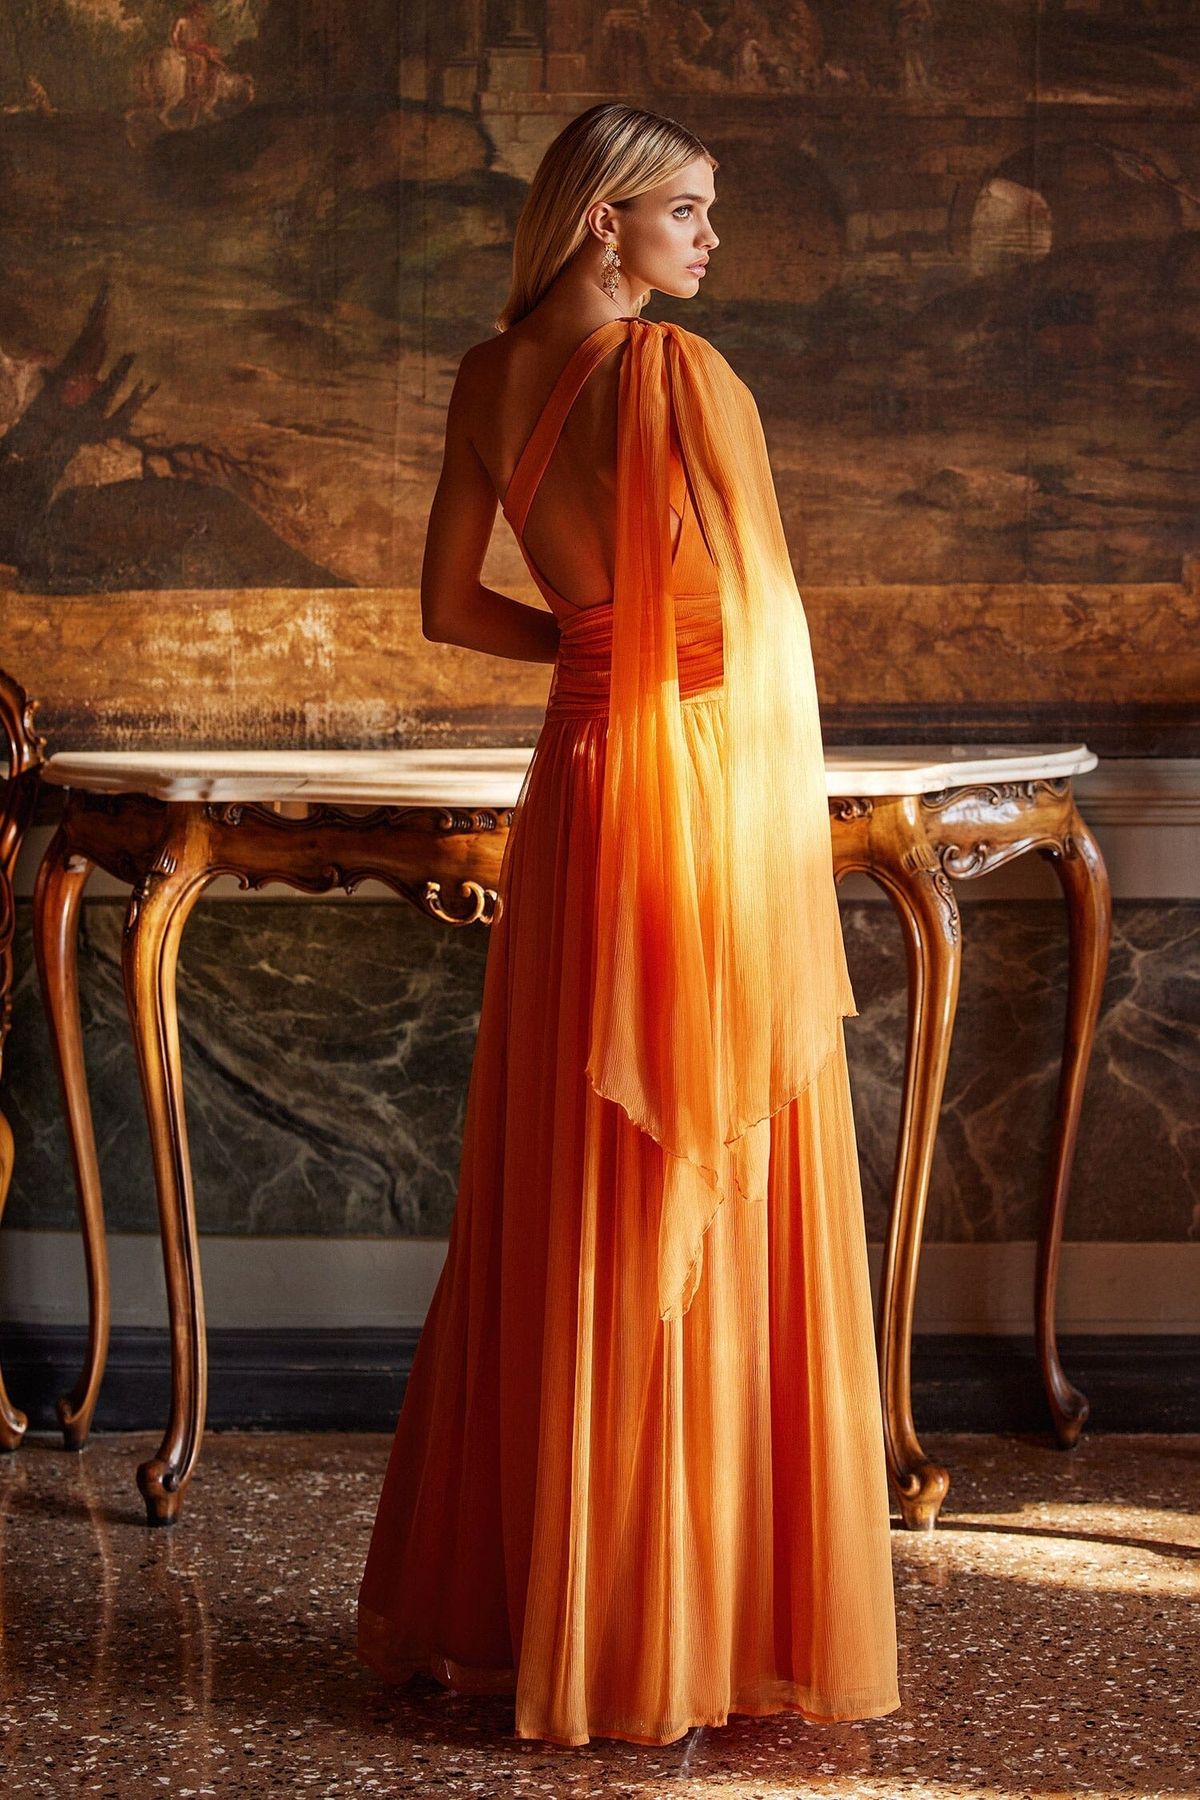 Style Sarelle Alamour The Label Size L Plunge Orange Side Slit Dress on Queenly